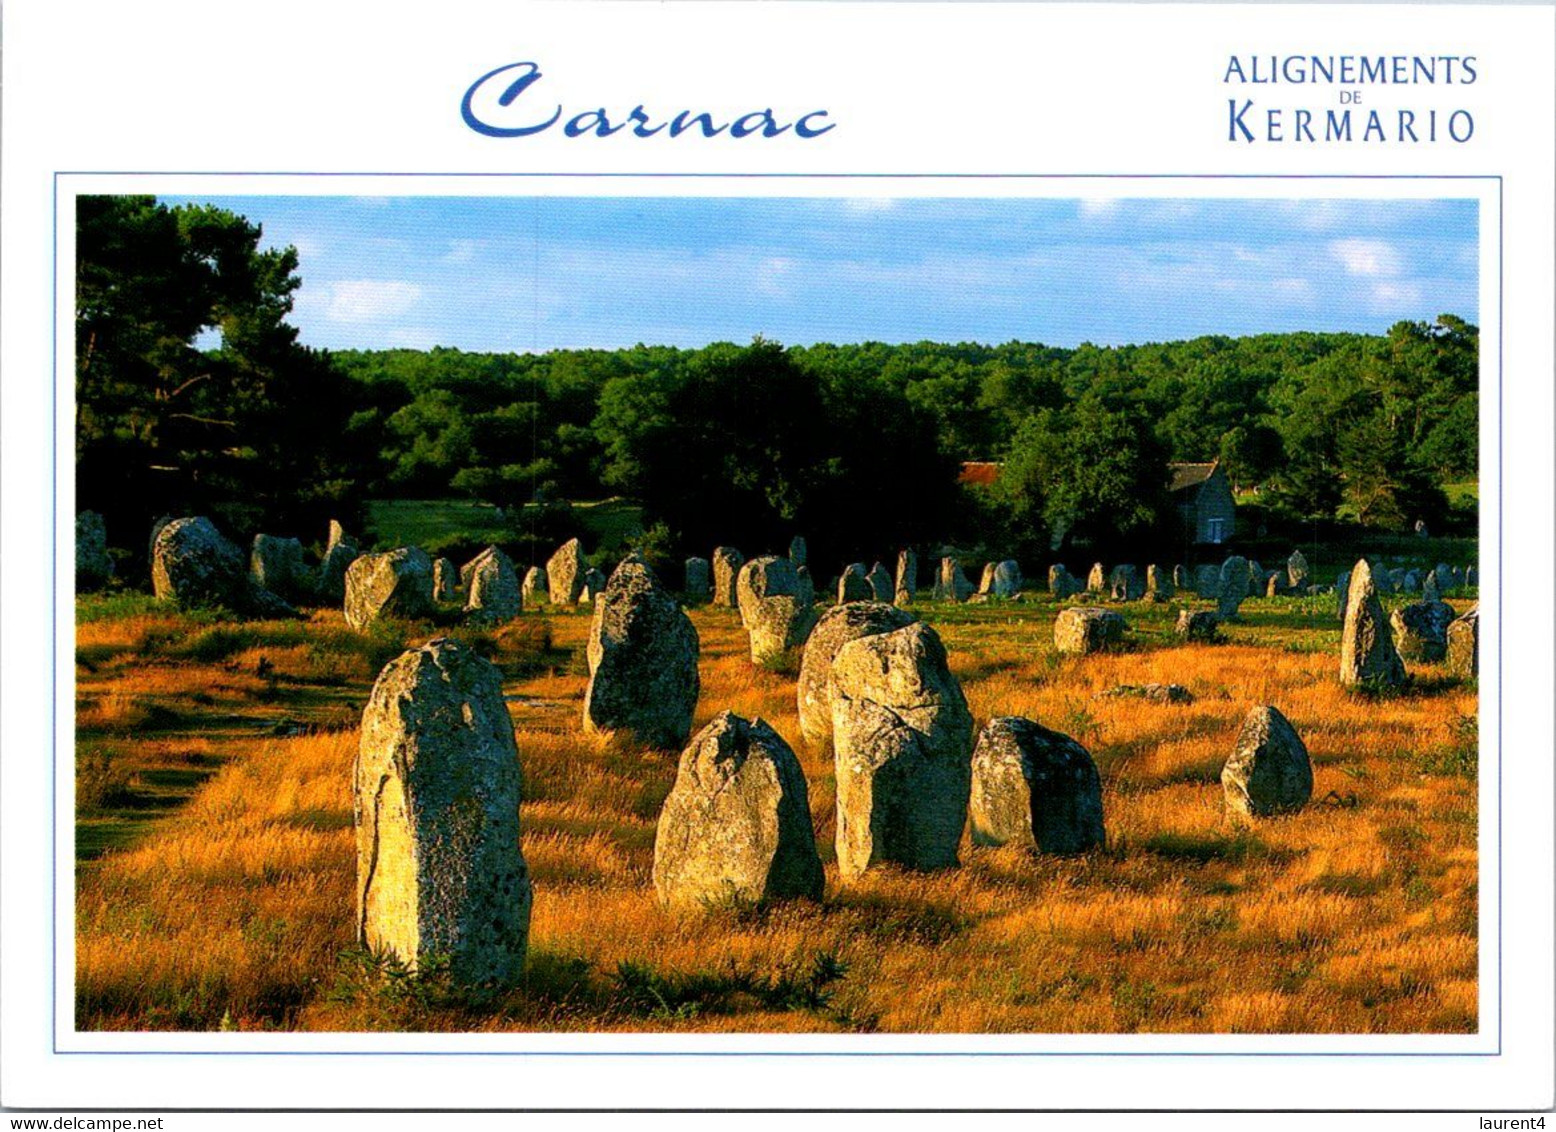 (1 H 50) M+S - France - Carnac Menhir - Dolmen & Menhirs